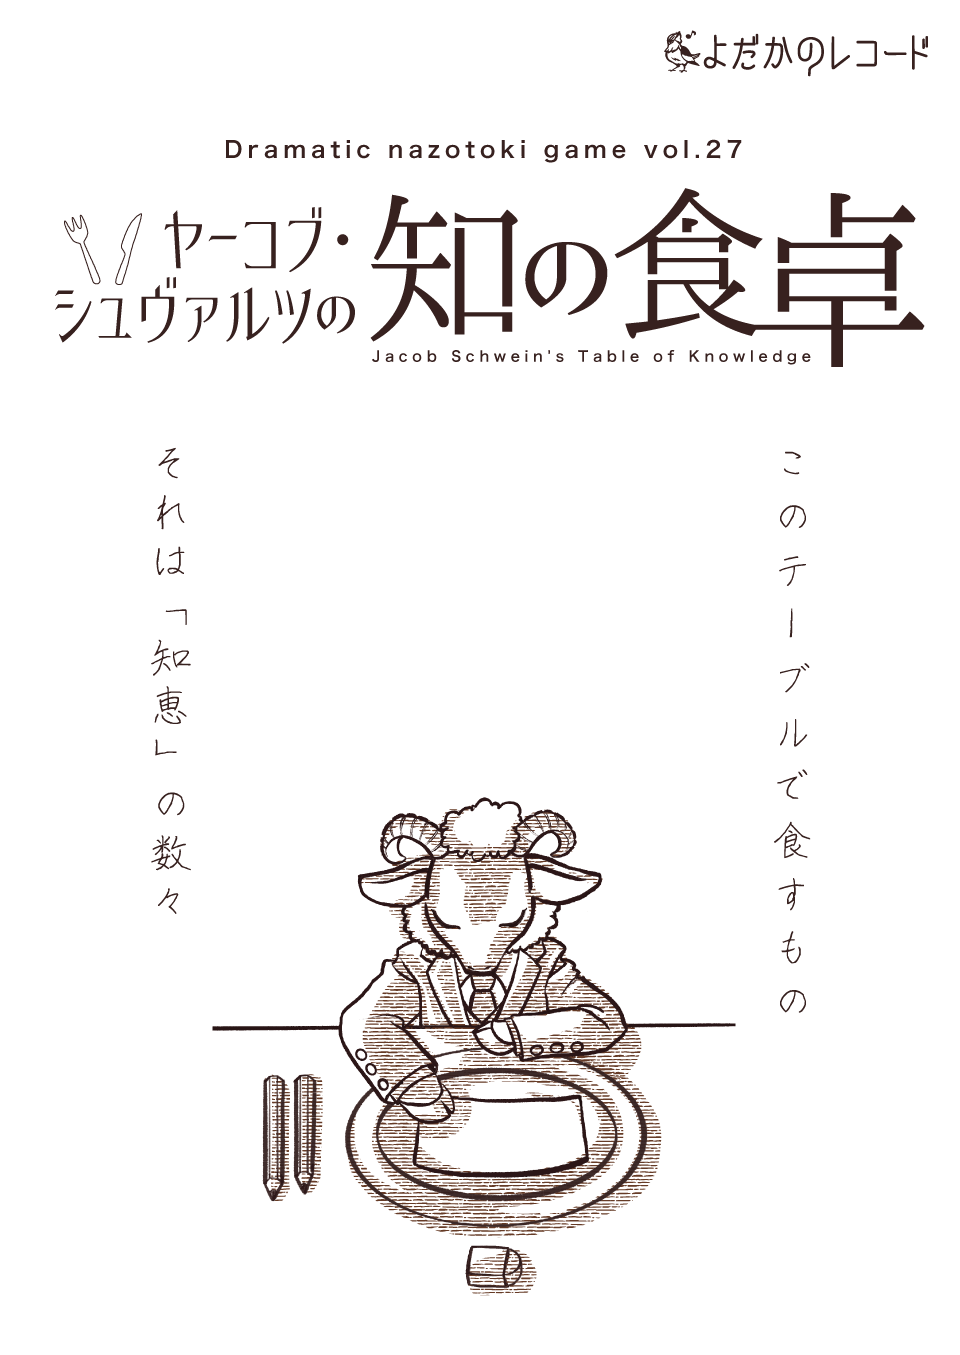 Dramatic nazotoki game vol.27「ヤーコブ・シュヴァルツの知の食卓」【大阪】